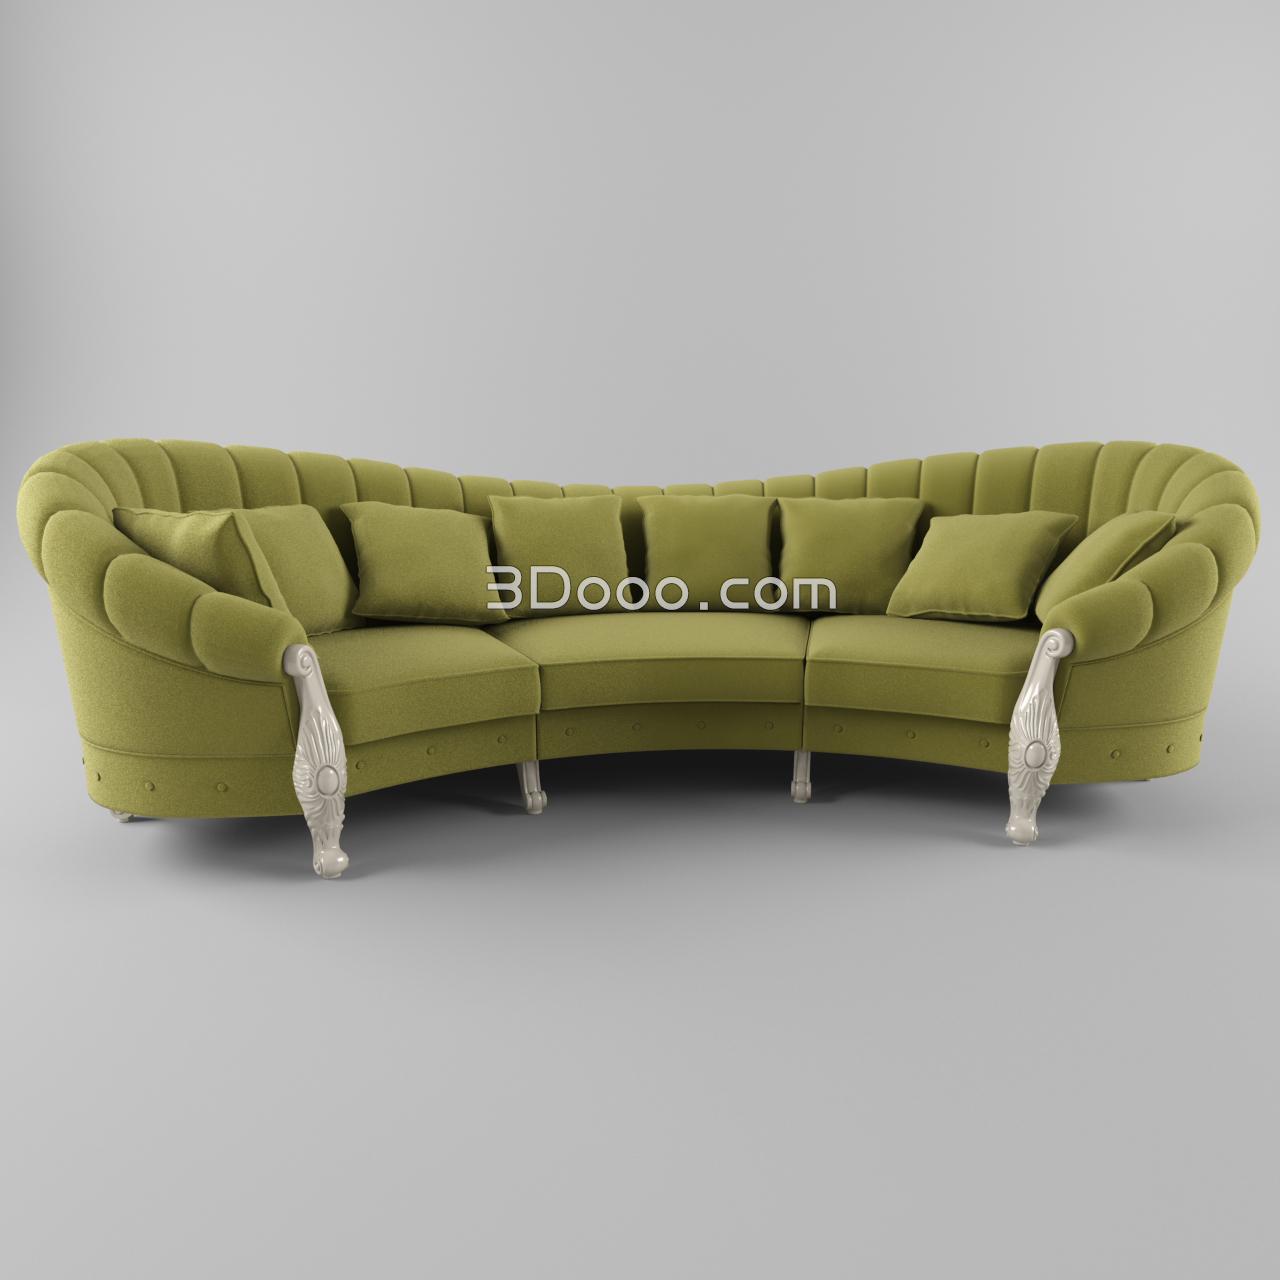 3Dooosemicircular sofa.jpg